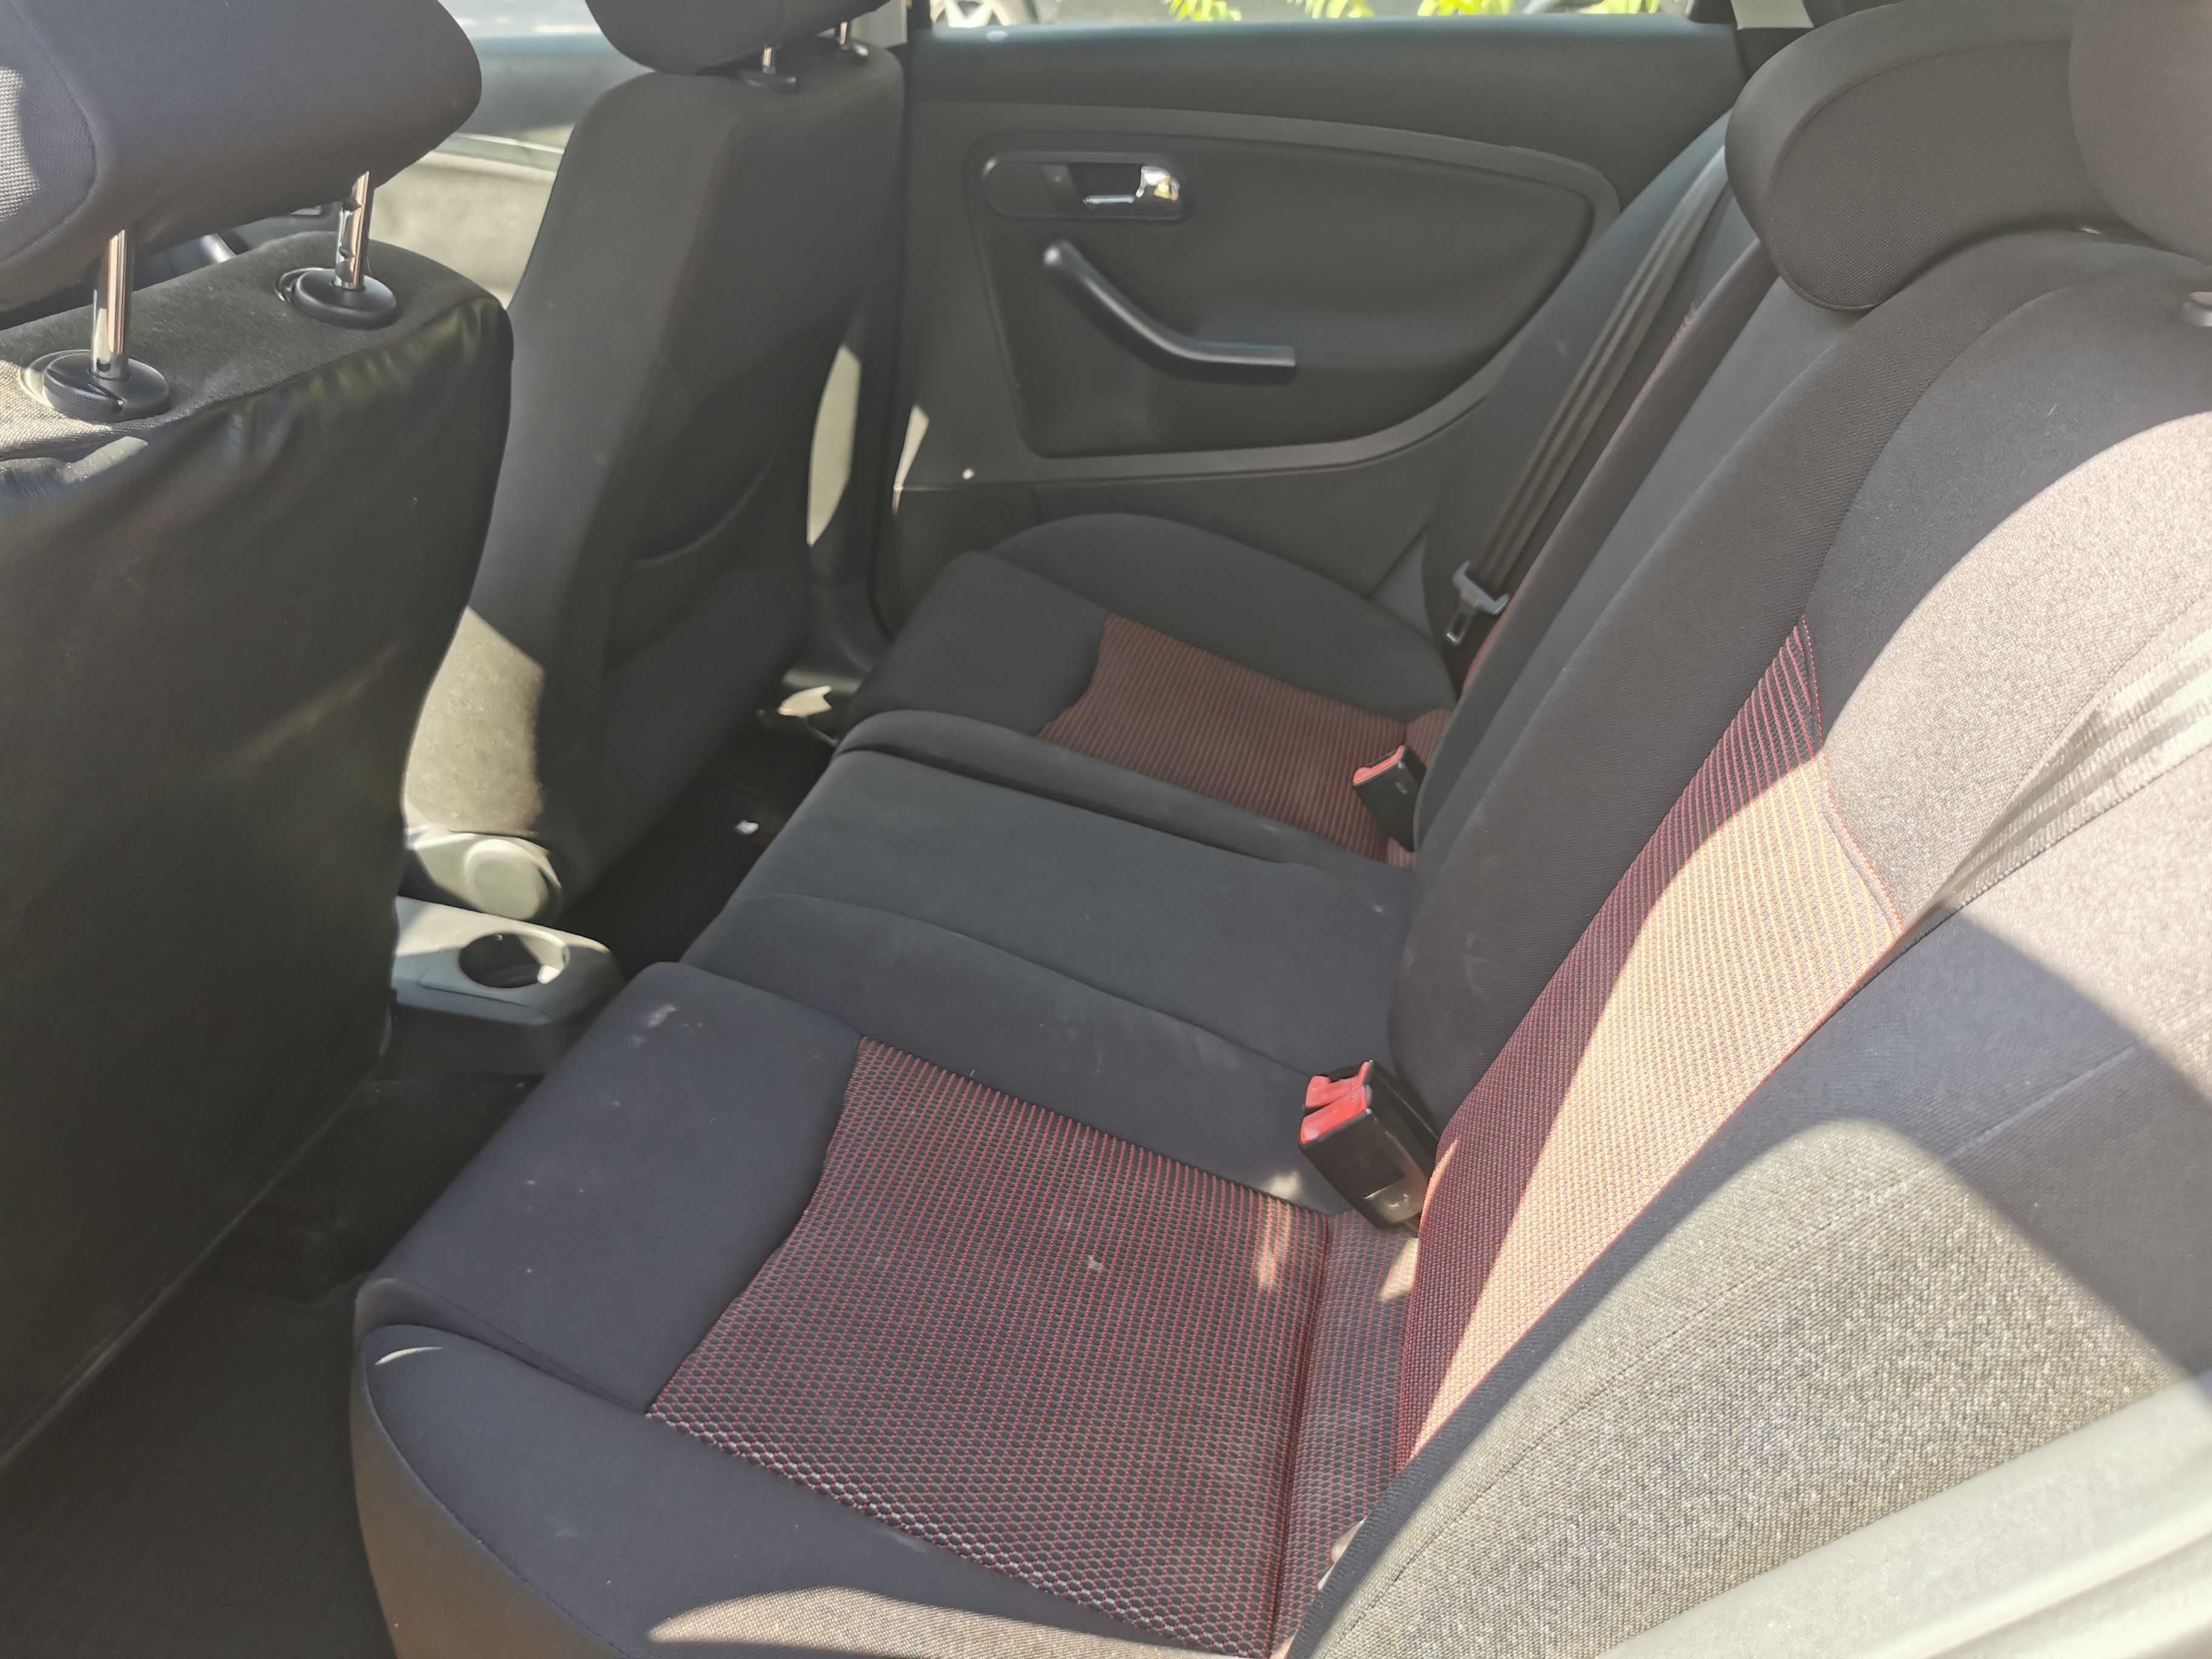 Vand Seat Ibiza 1.4 TDI , 80 CP, fabricat 2006 - euro 4, climatronic